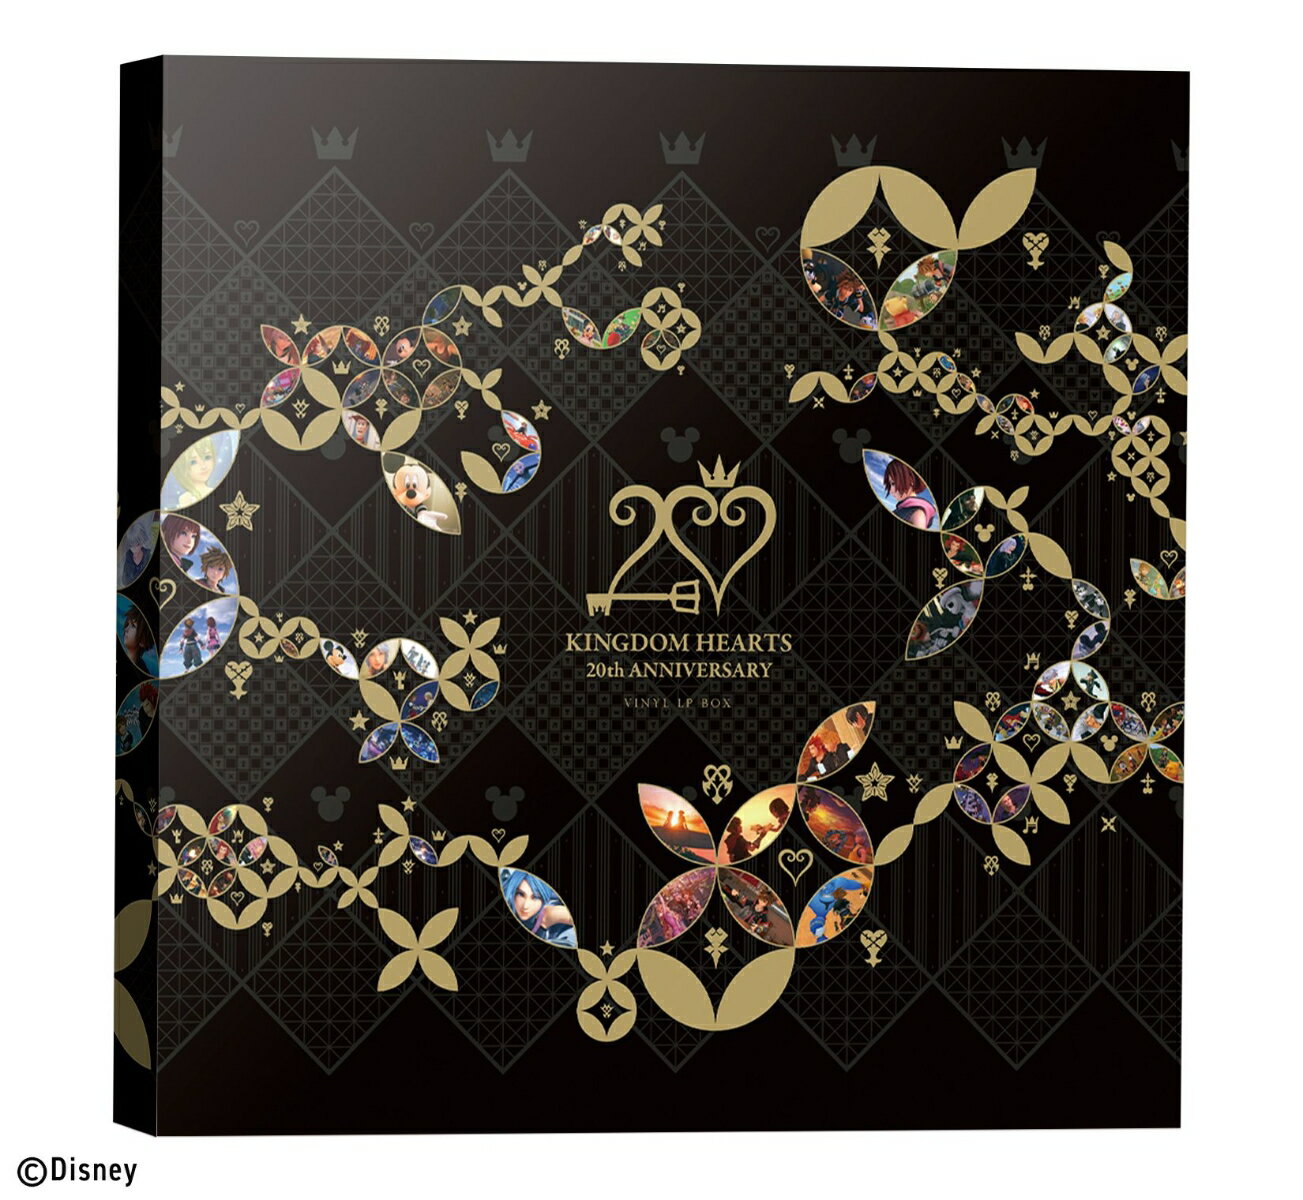 KINGDOM HEARTS 20TH ANNIVERSARY VINYL LP BOX【アナログ盤】 (ゲーム ミュージック)